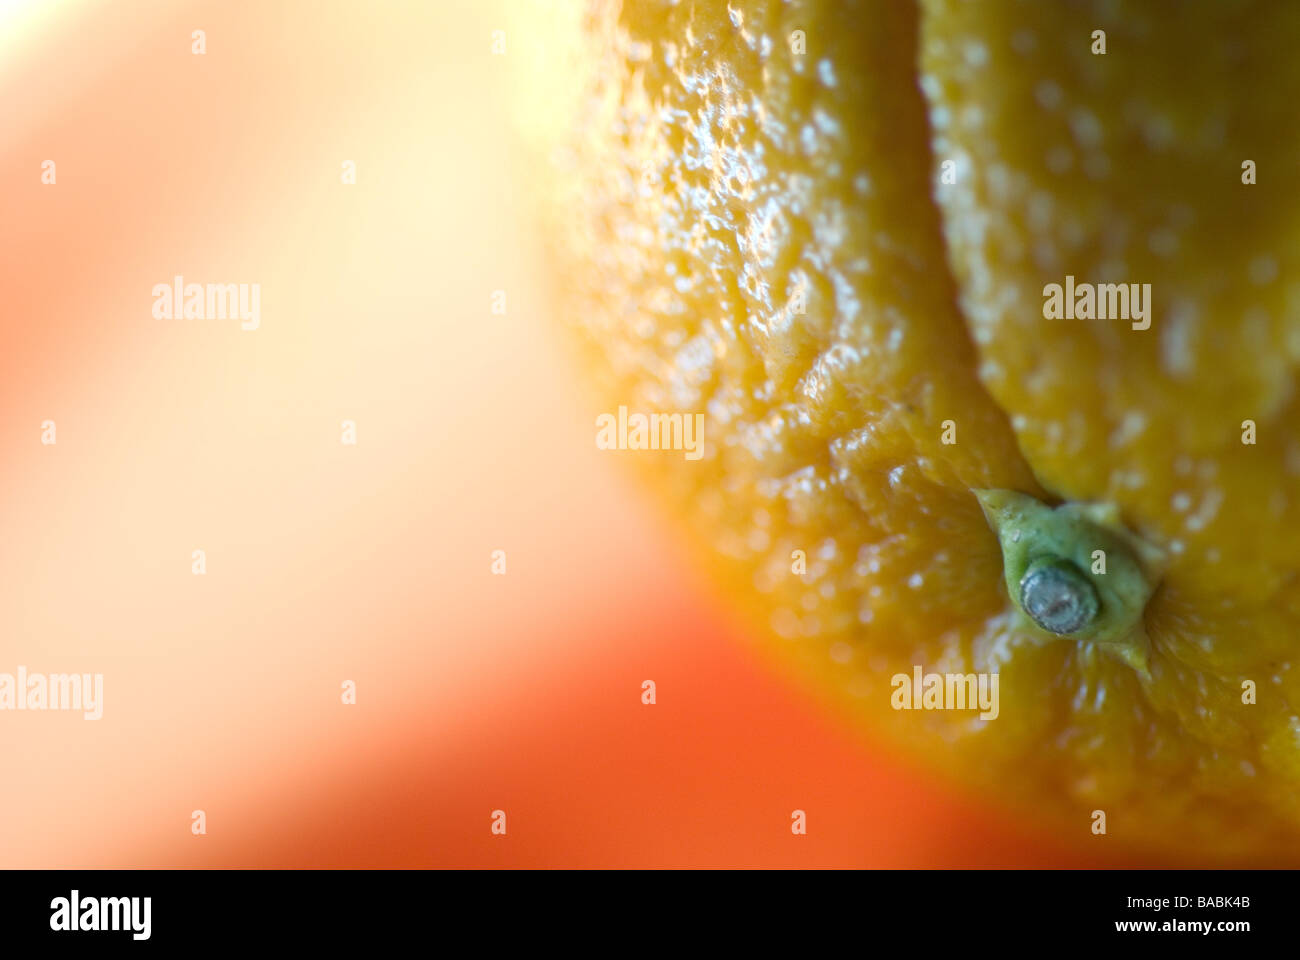 Orange Peel Skin Hi Res Stock Photography And Images Alamy